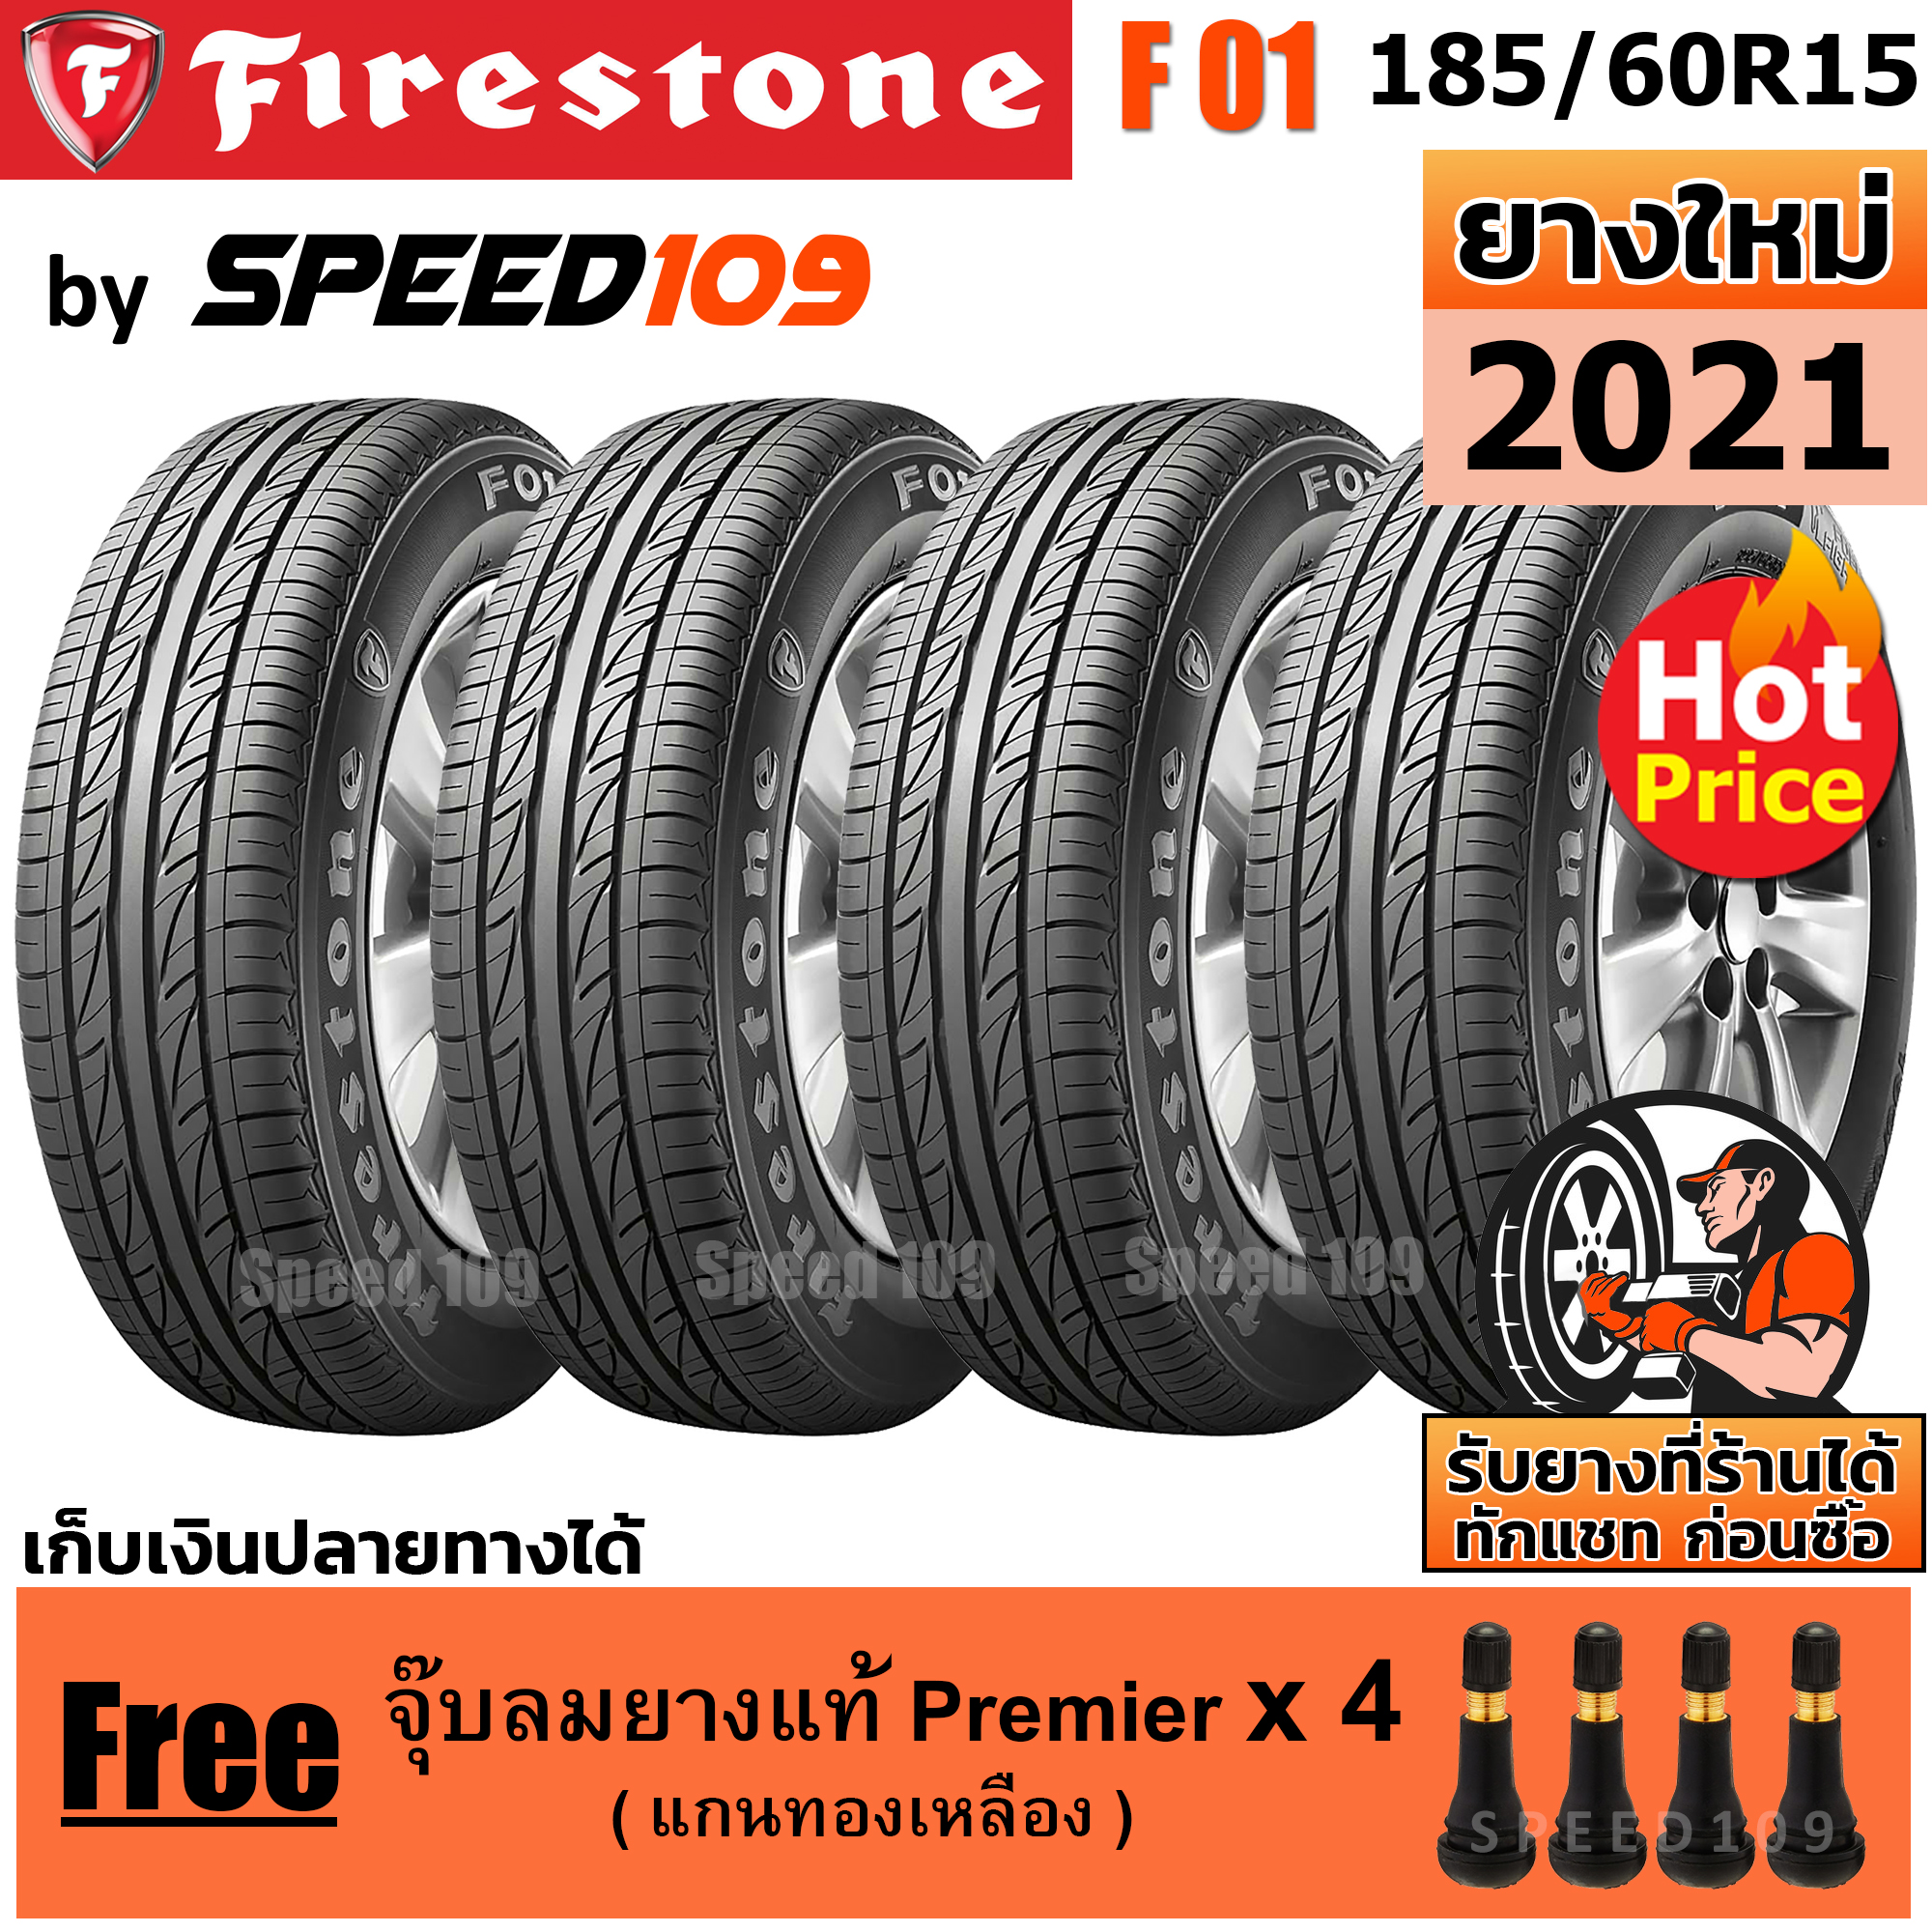 FIRESTONE ยางรถยนต์ ขอบ 15 ขนาด 185/60R15 รุ่น F01 - 4 เส้น (ปี 2021)